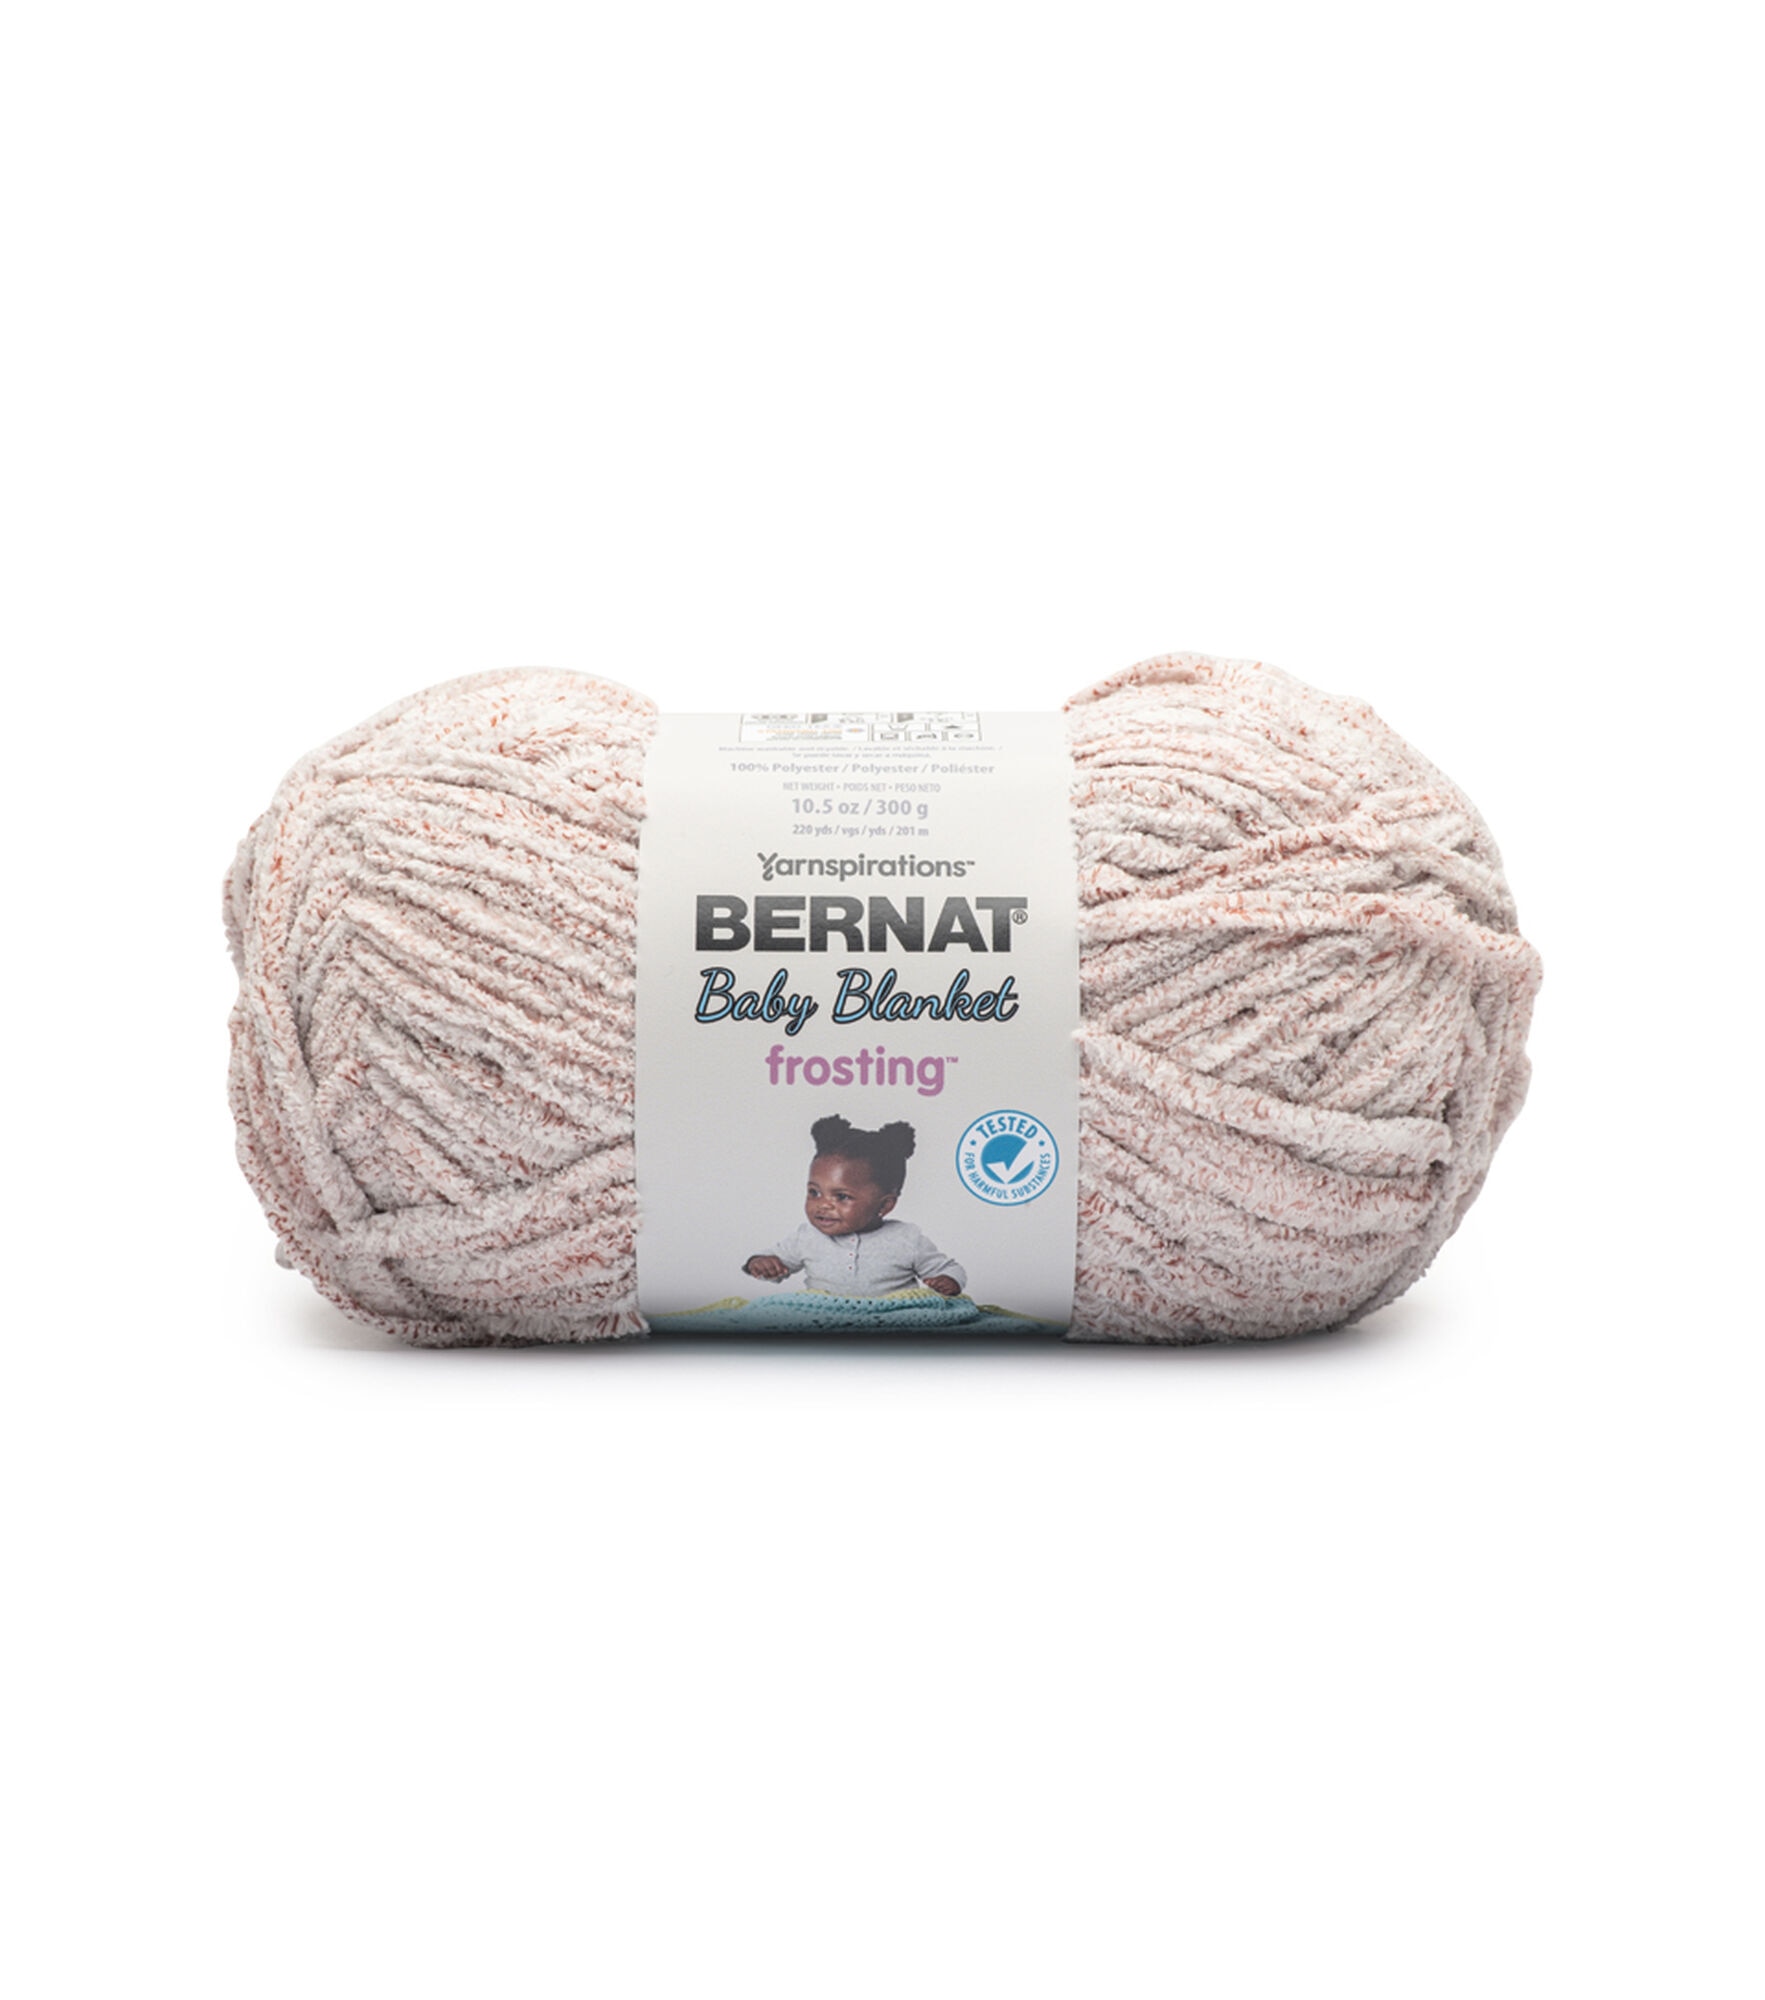 bernat yarn wholesale at Best Value 